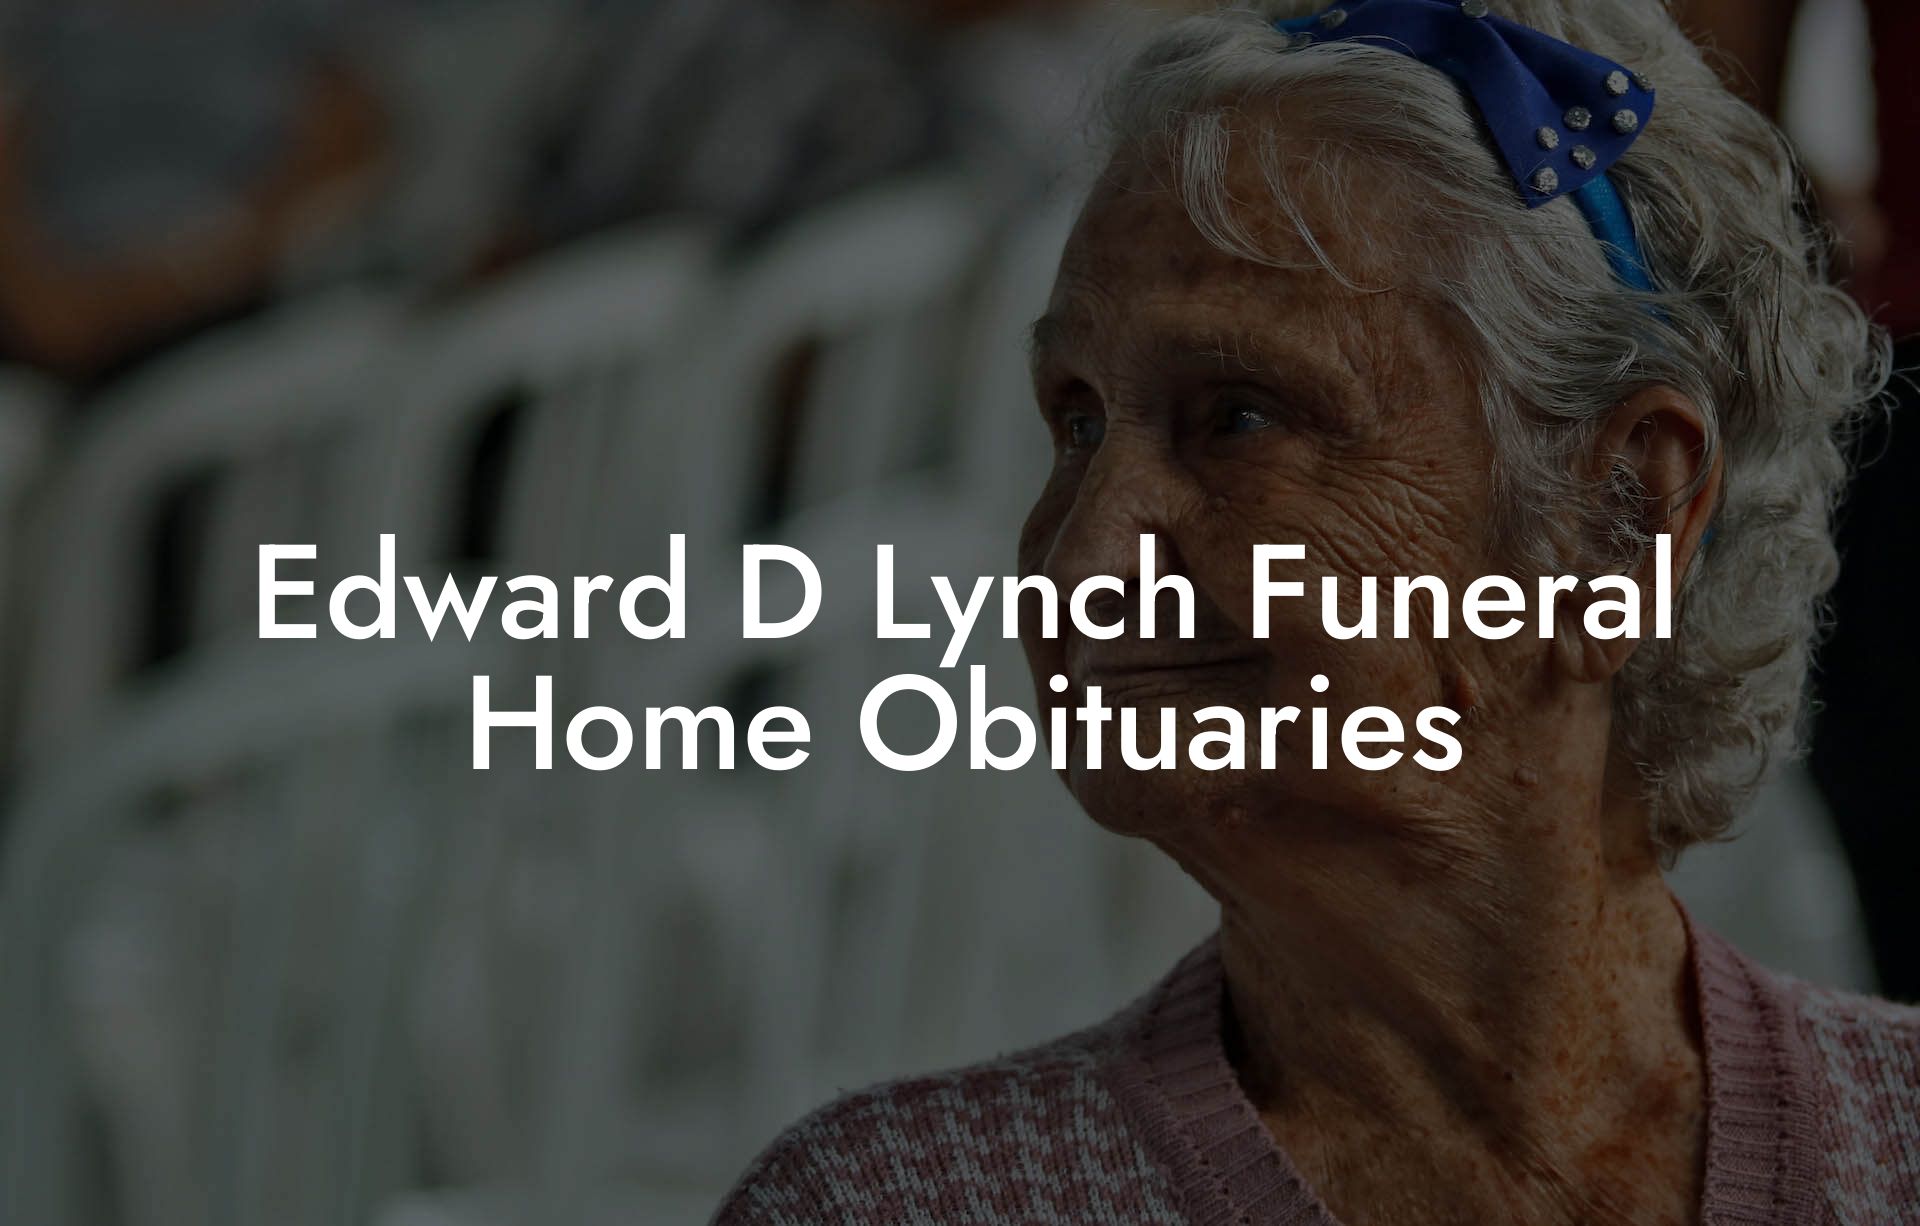 Edward D Lynch Funeral Home Obituaries